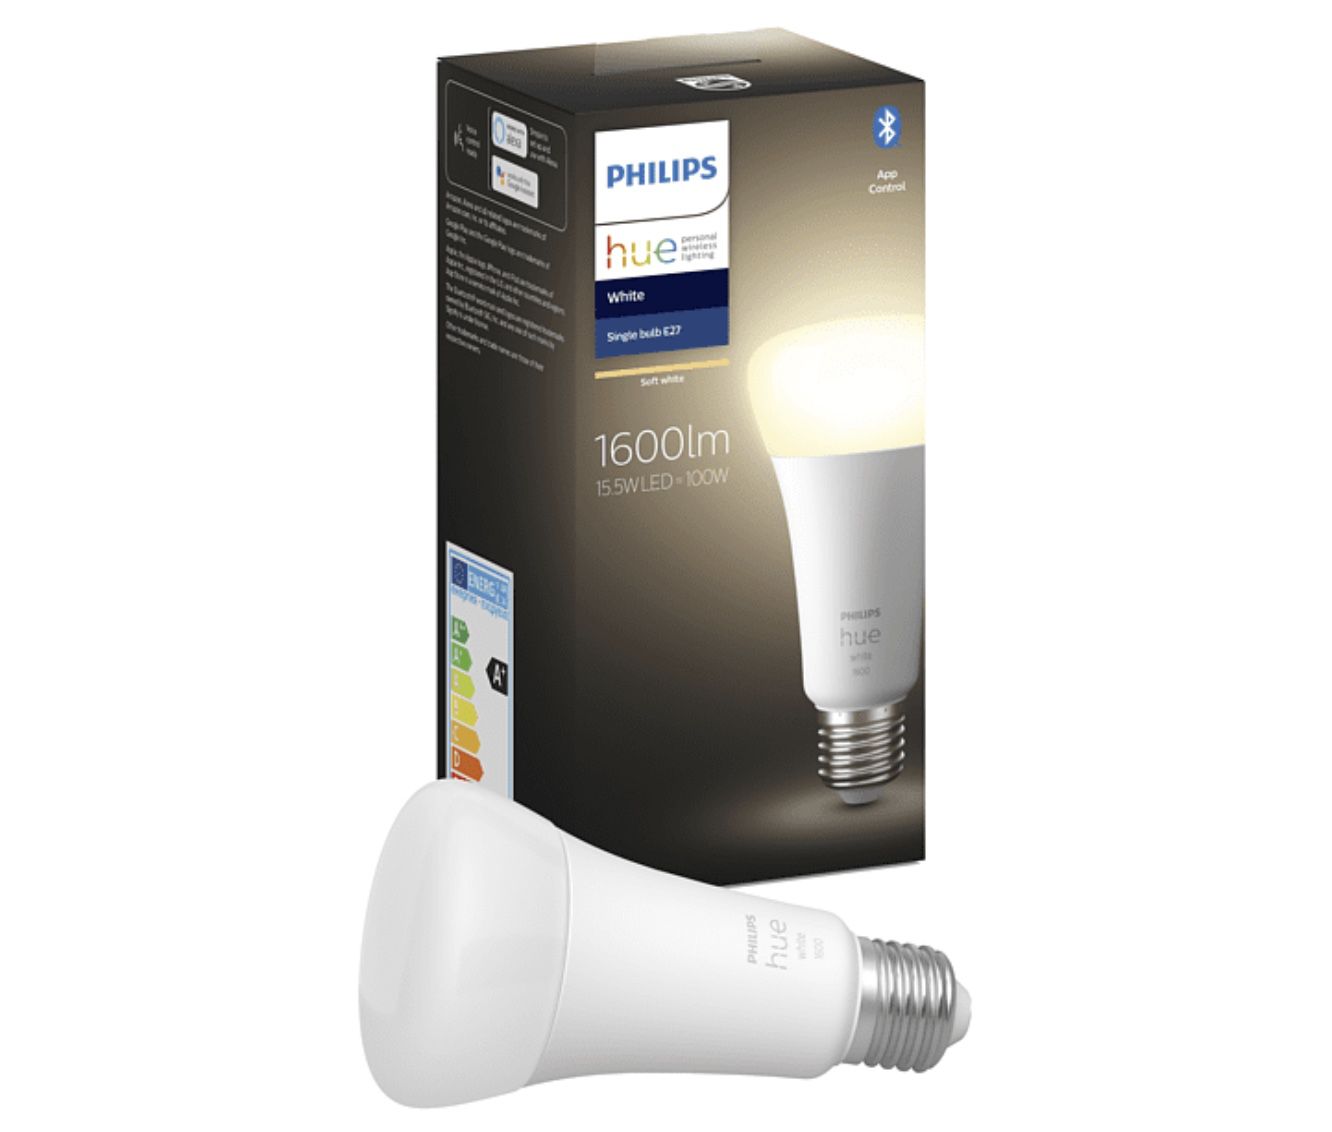 Philips Hue White E27 LED Lampe mit Bluetooth für 10,99€ (statt 22€)